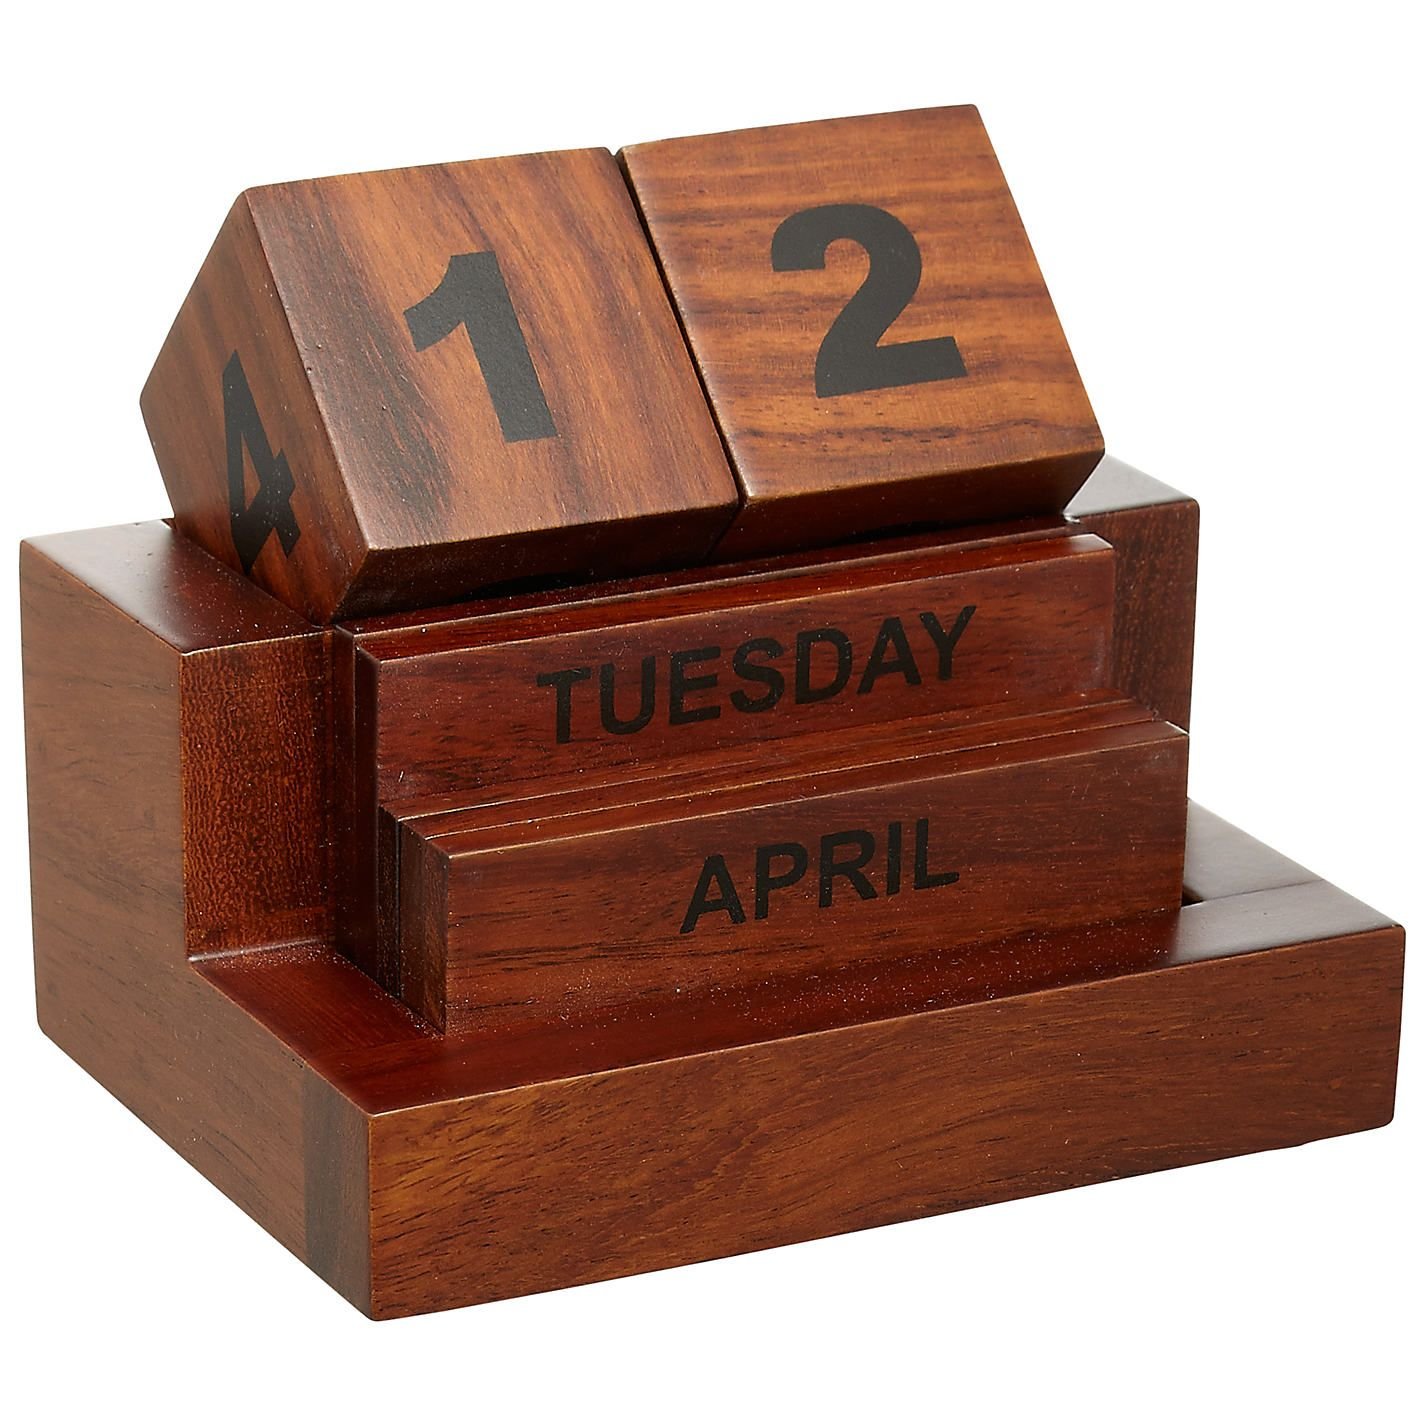 Календарь из кубиков. Вечный календарь. Деревянный календарик. Календарь из кубиков деревянных.